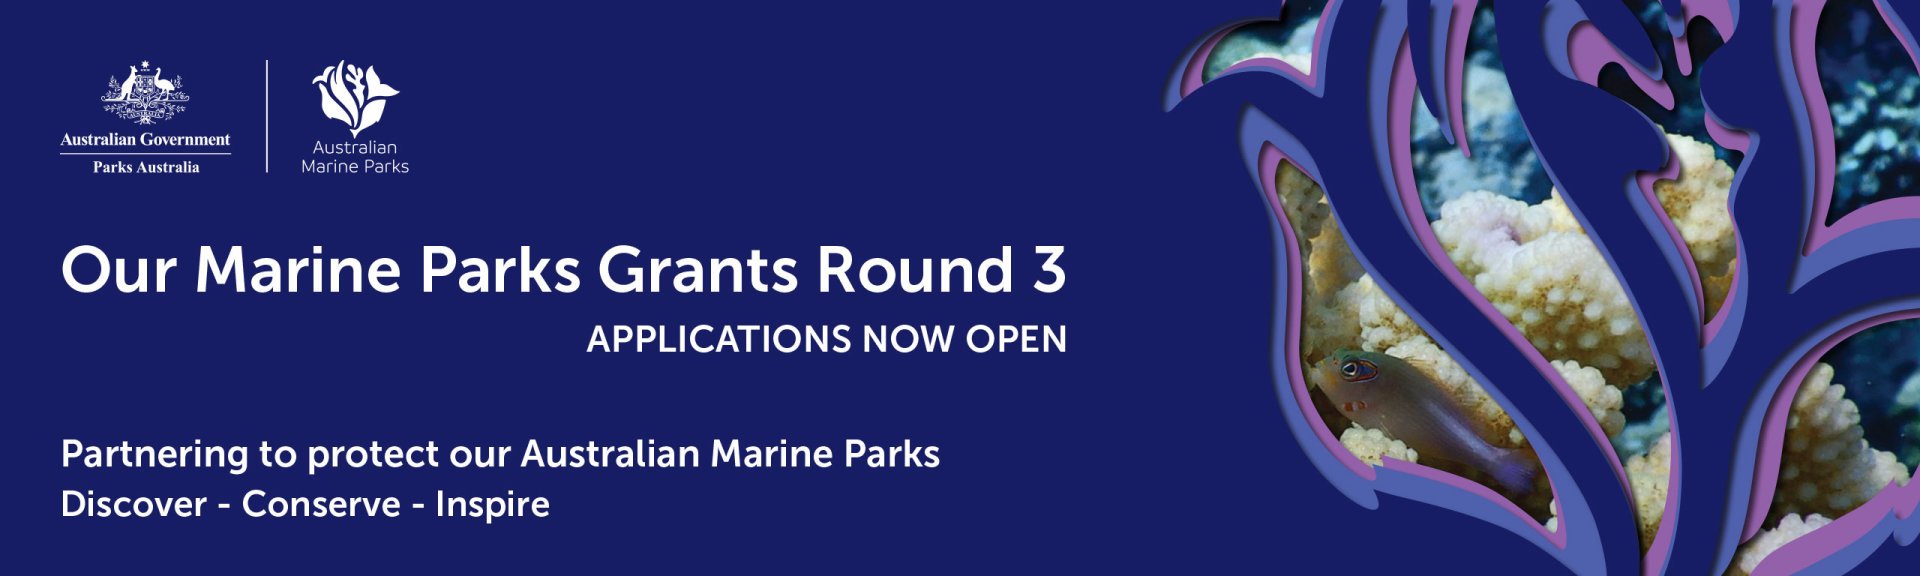 Amp socialwebbanners marineparksgrants round3 open 2021 fa 2560x768.